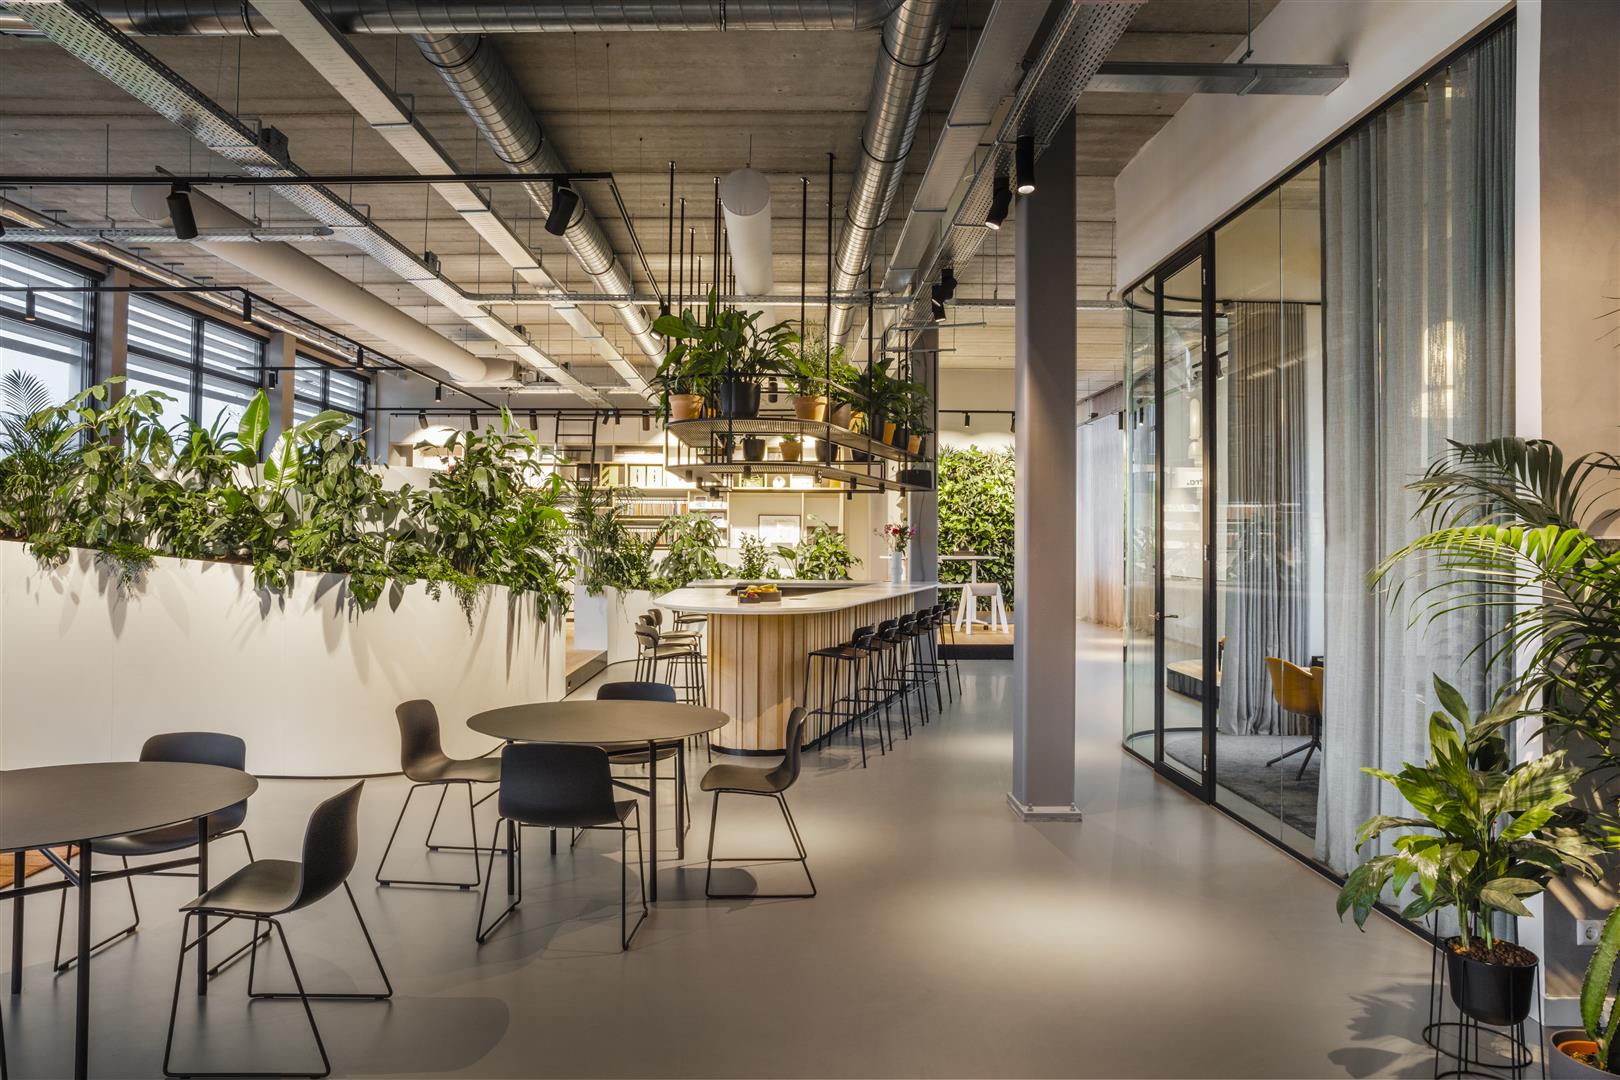 InteriorWorks offices in Amsterdam, The Netherlands (Photo credit: Rick Geenjaar)